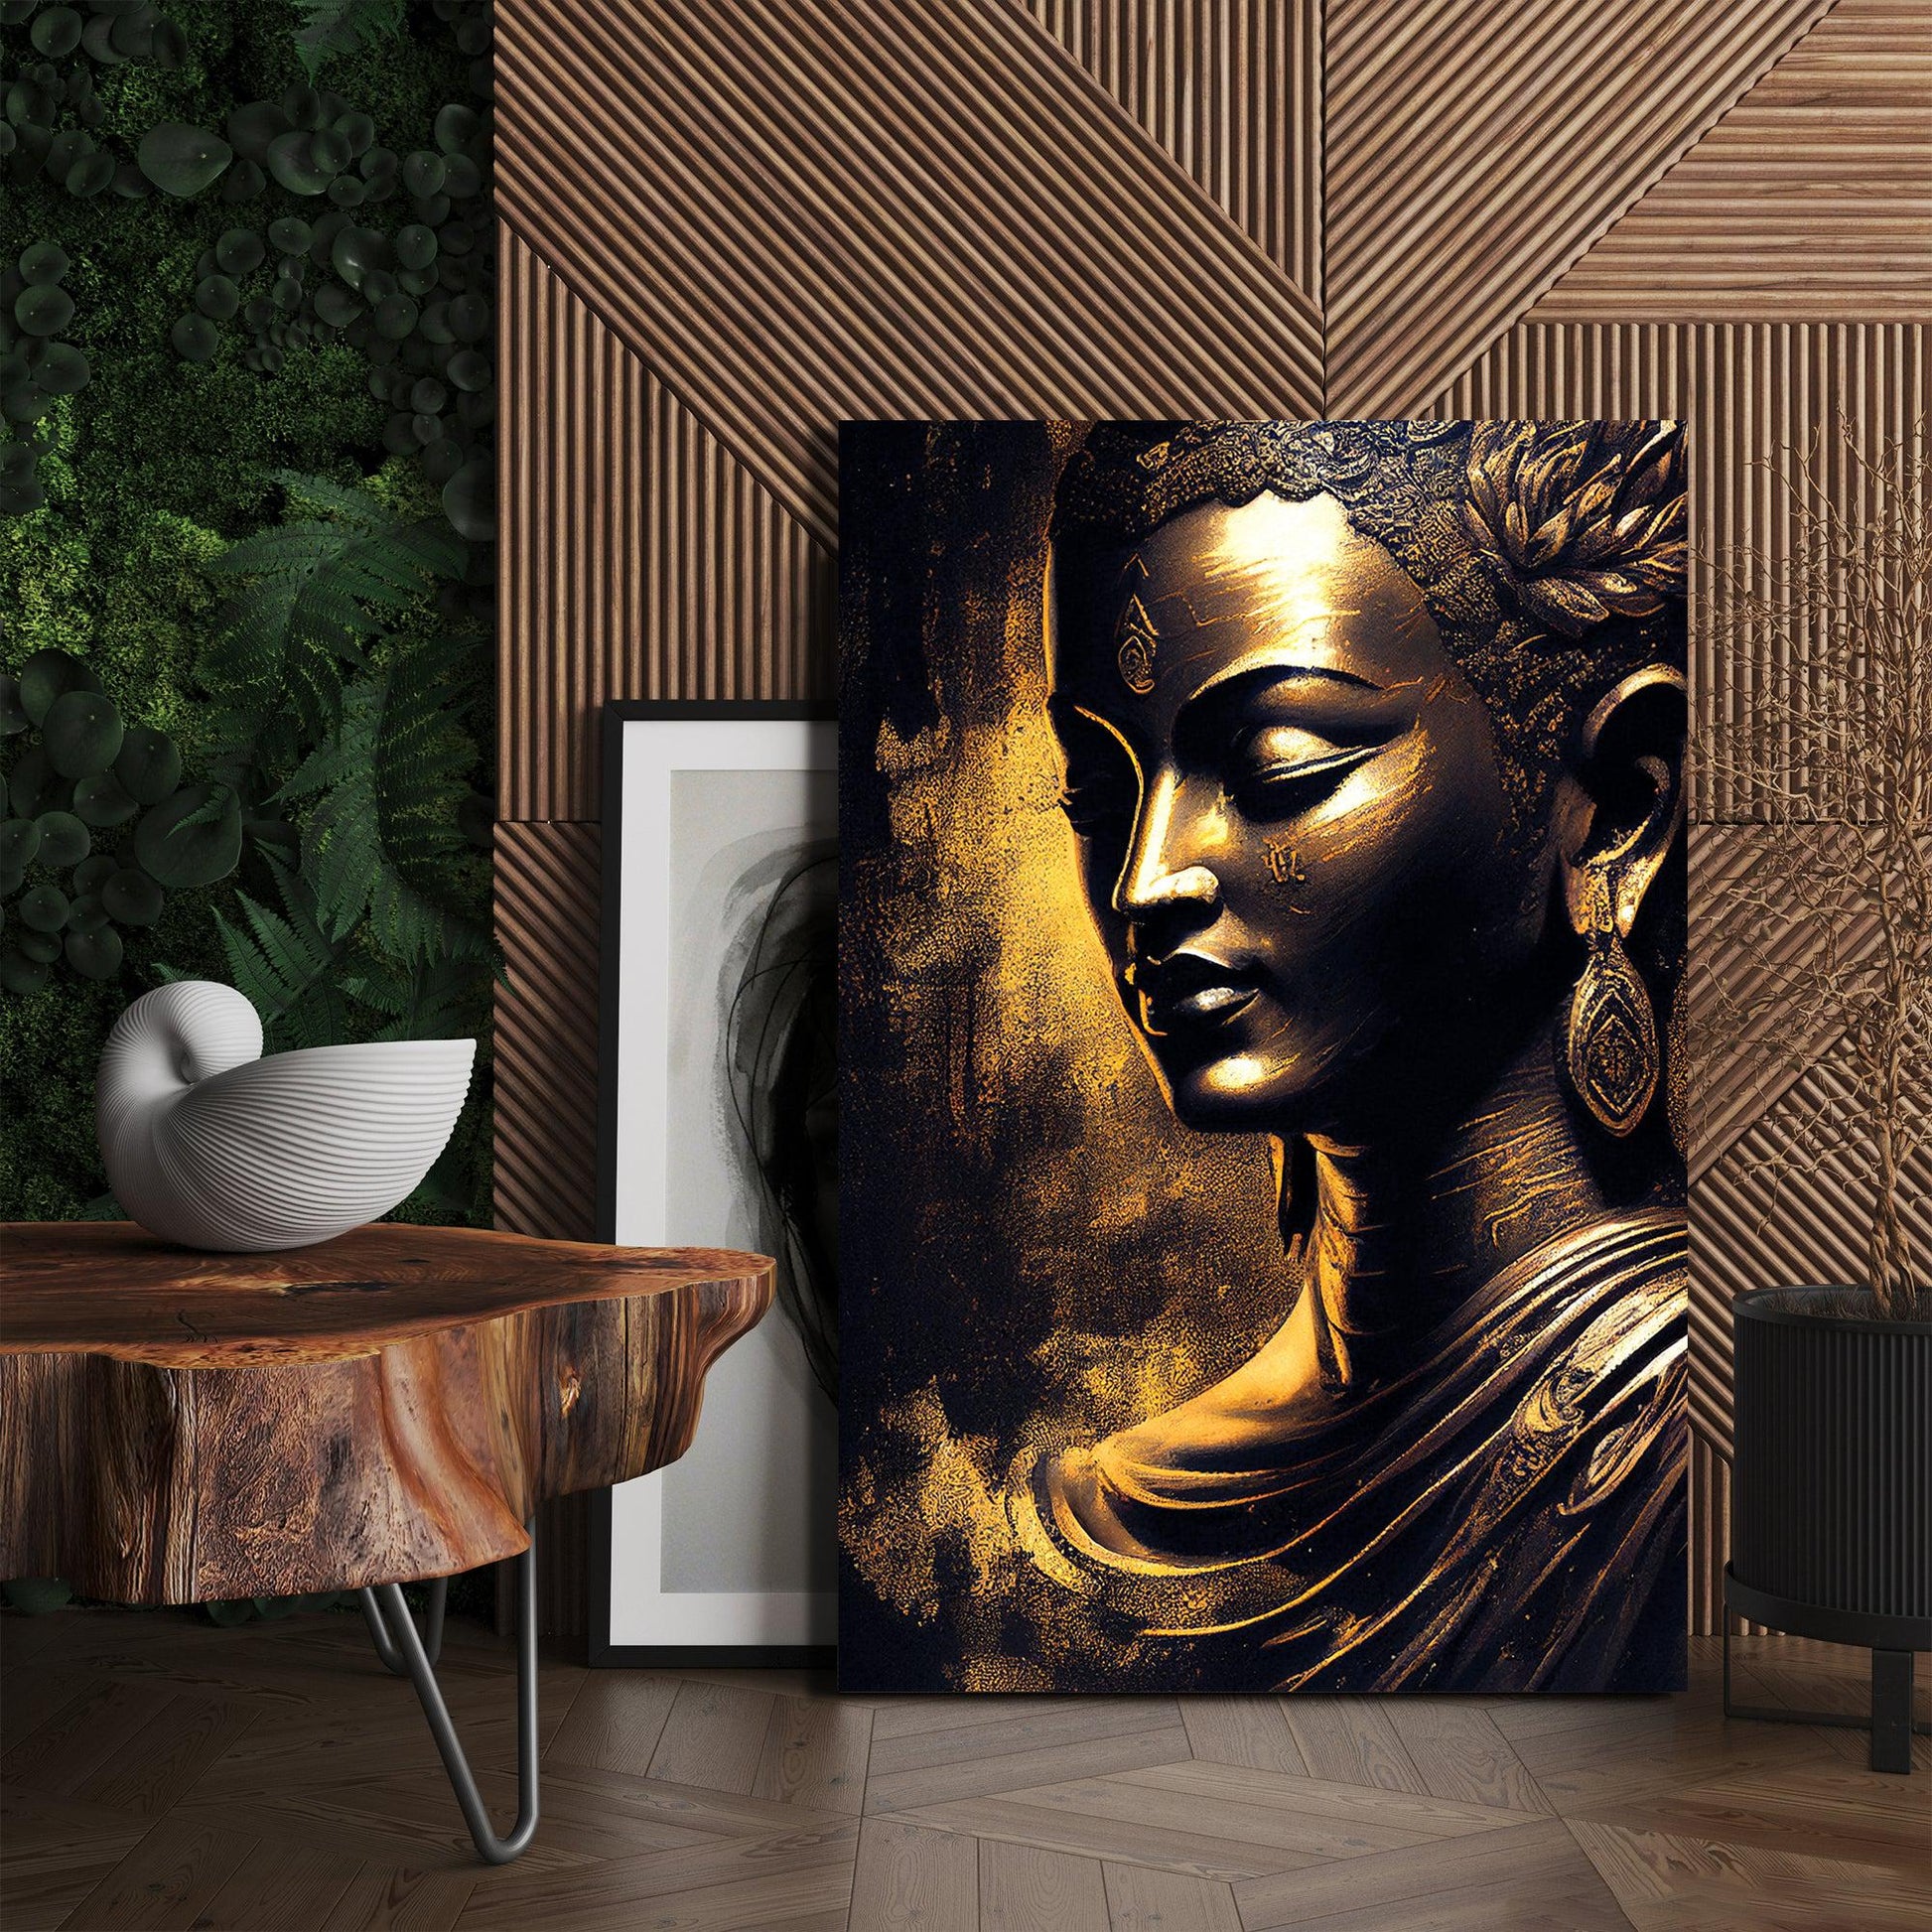 Lord Buddha Canvas Wall Art Painting